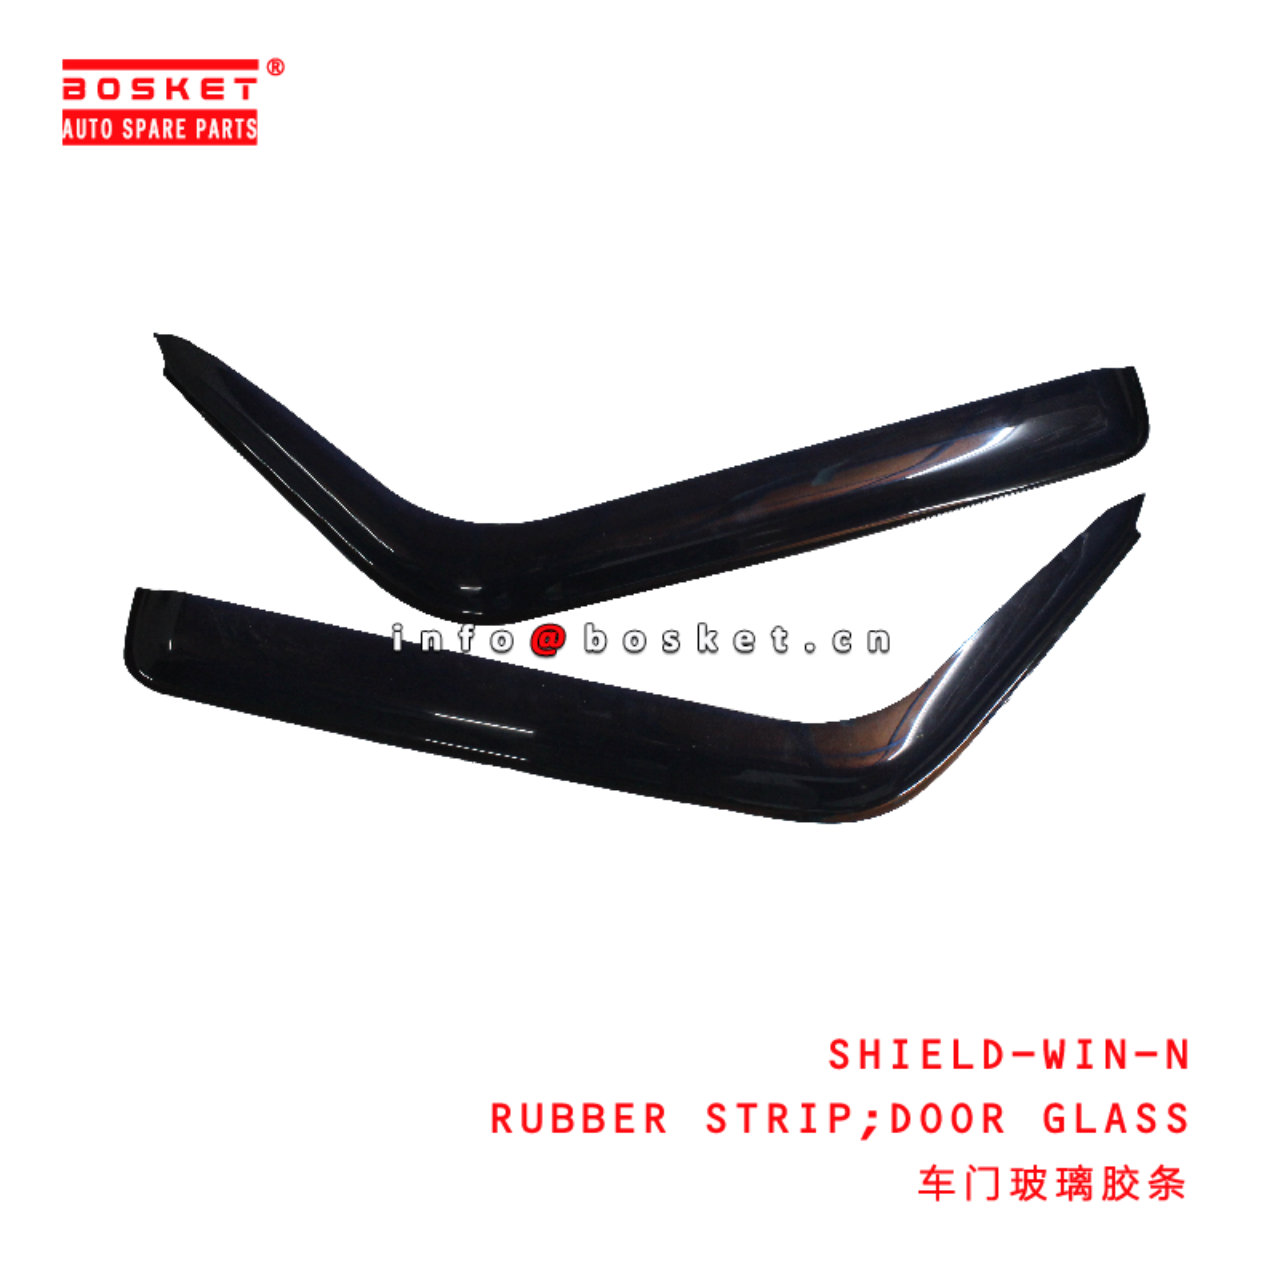 SHIELD-WIN-N Door Glass Rubber Strip suitable for ISUZU 600P 4KH1 SHIELD-WIN-N